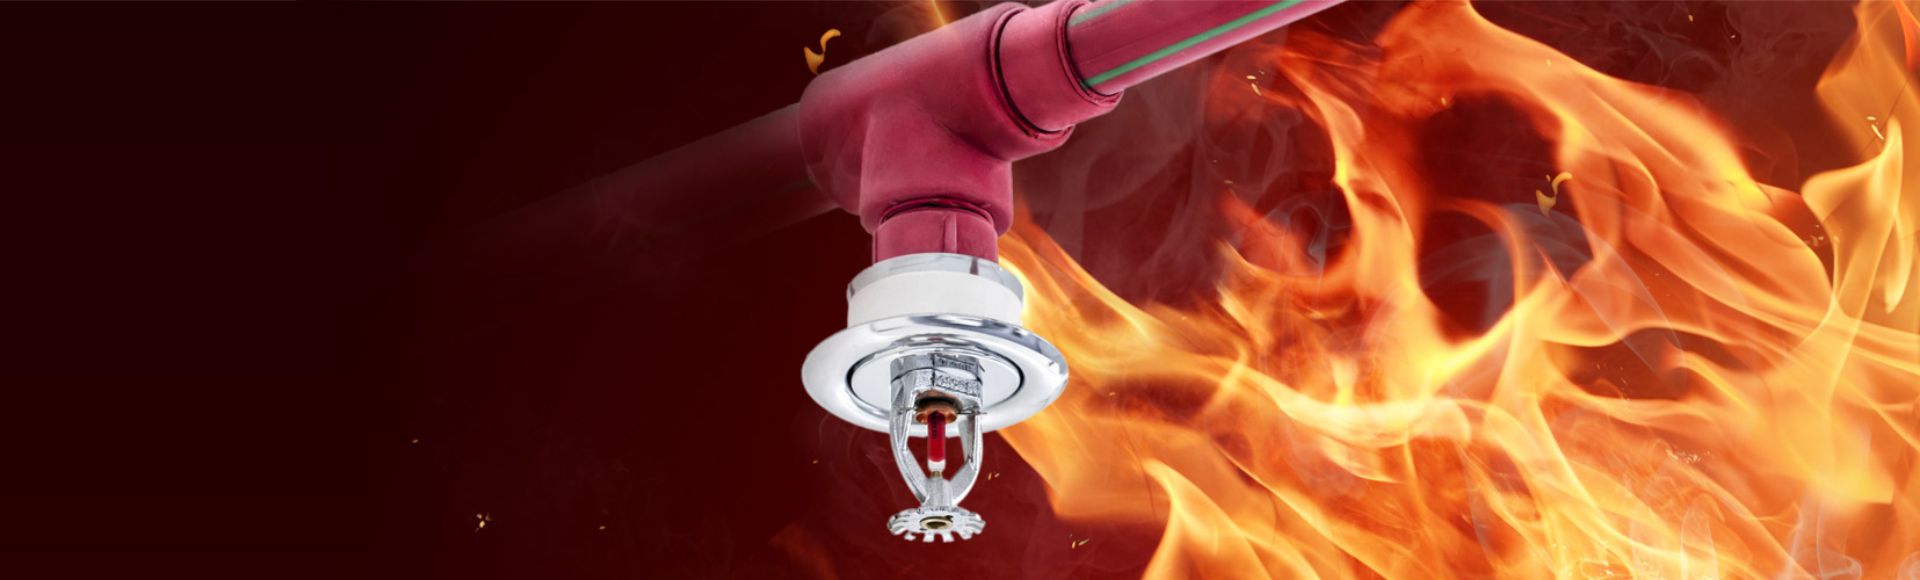 Sistema de Hidrantes e Sprinklers